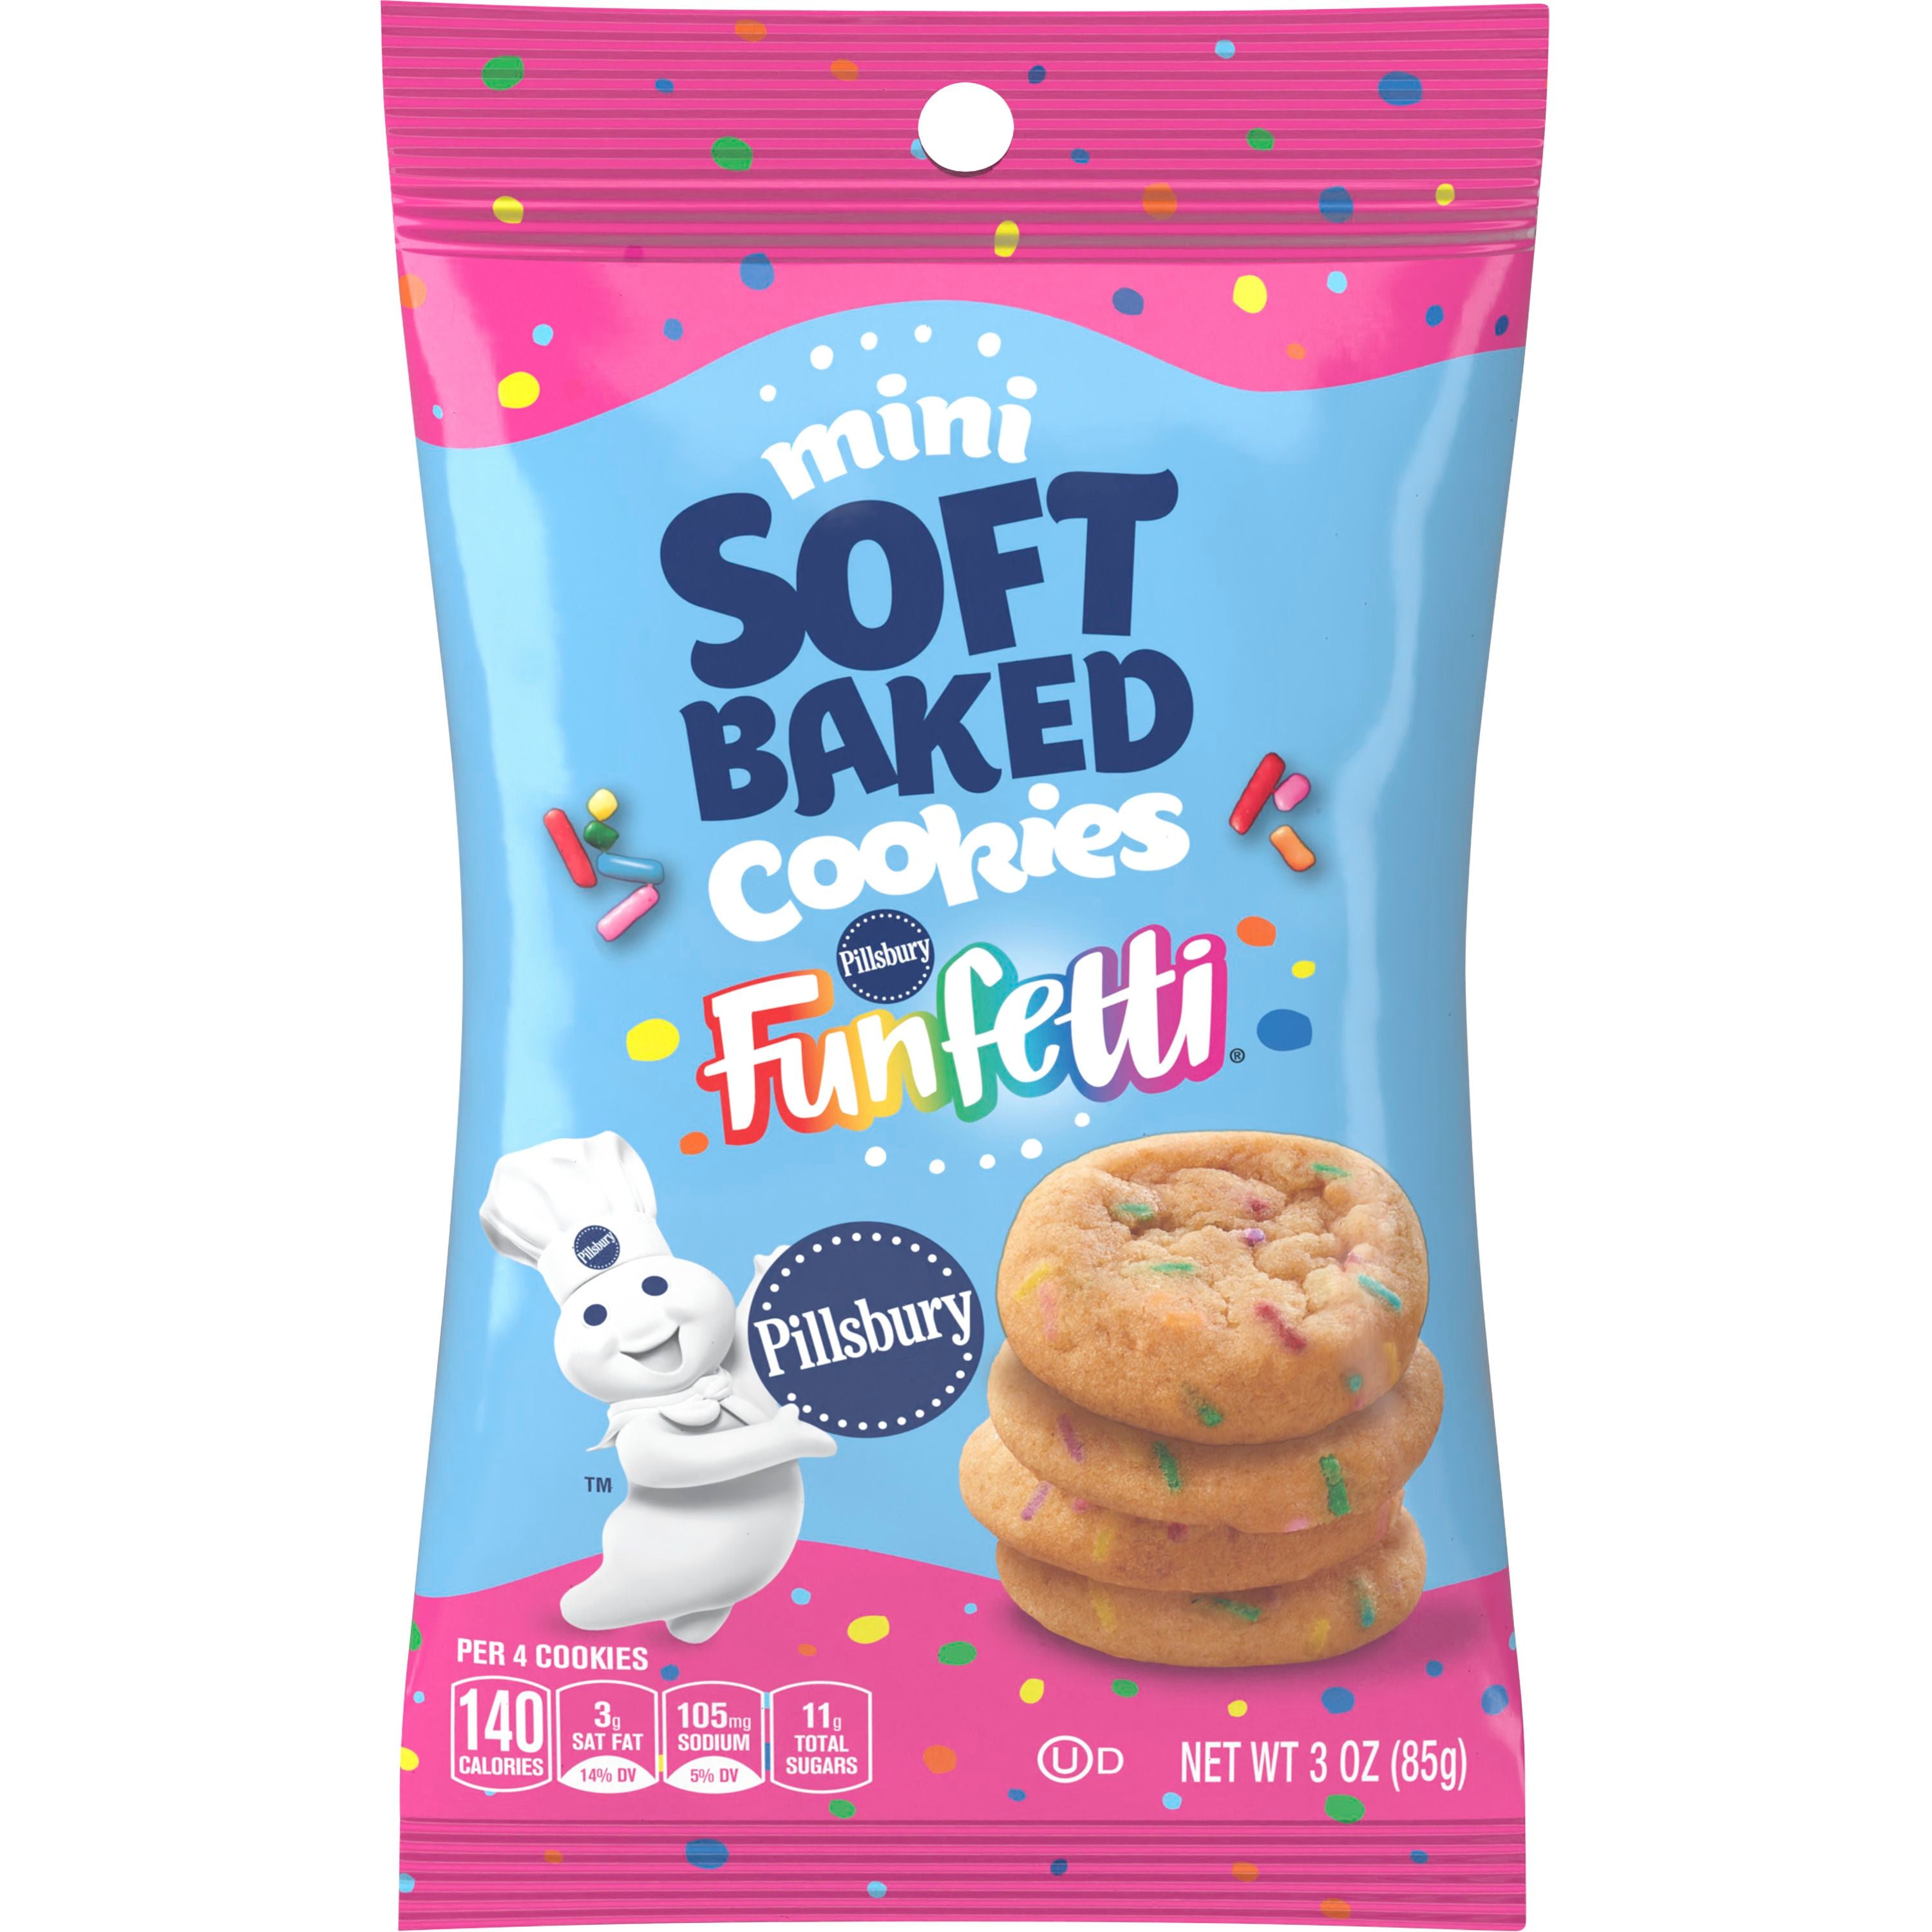 Pillsbury Mini Soft Baked Cookies Funfetti 85g (6 pack) - A3